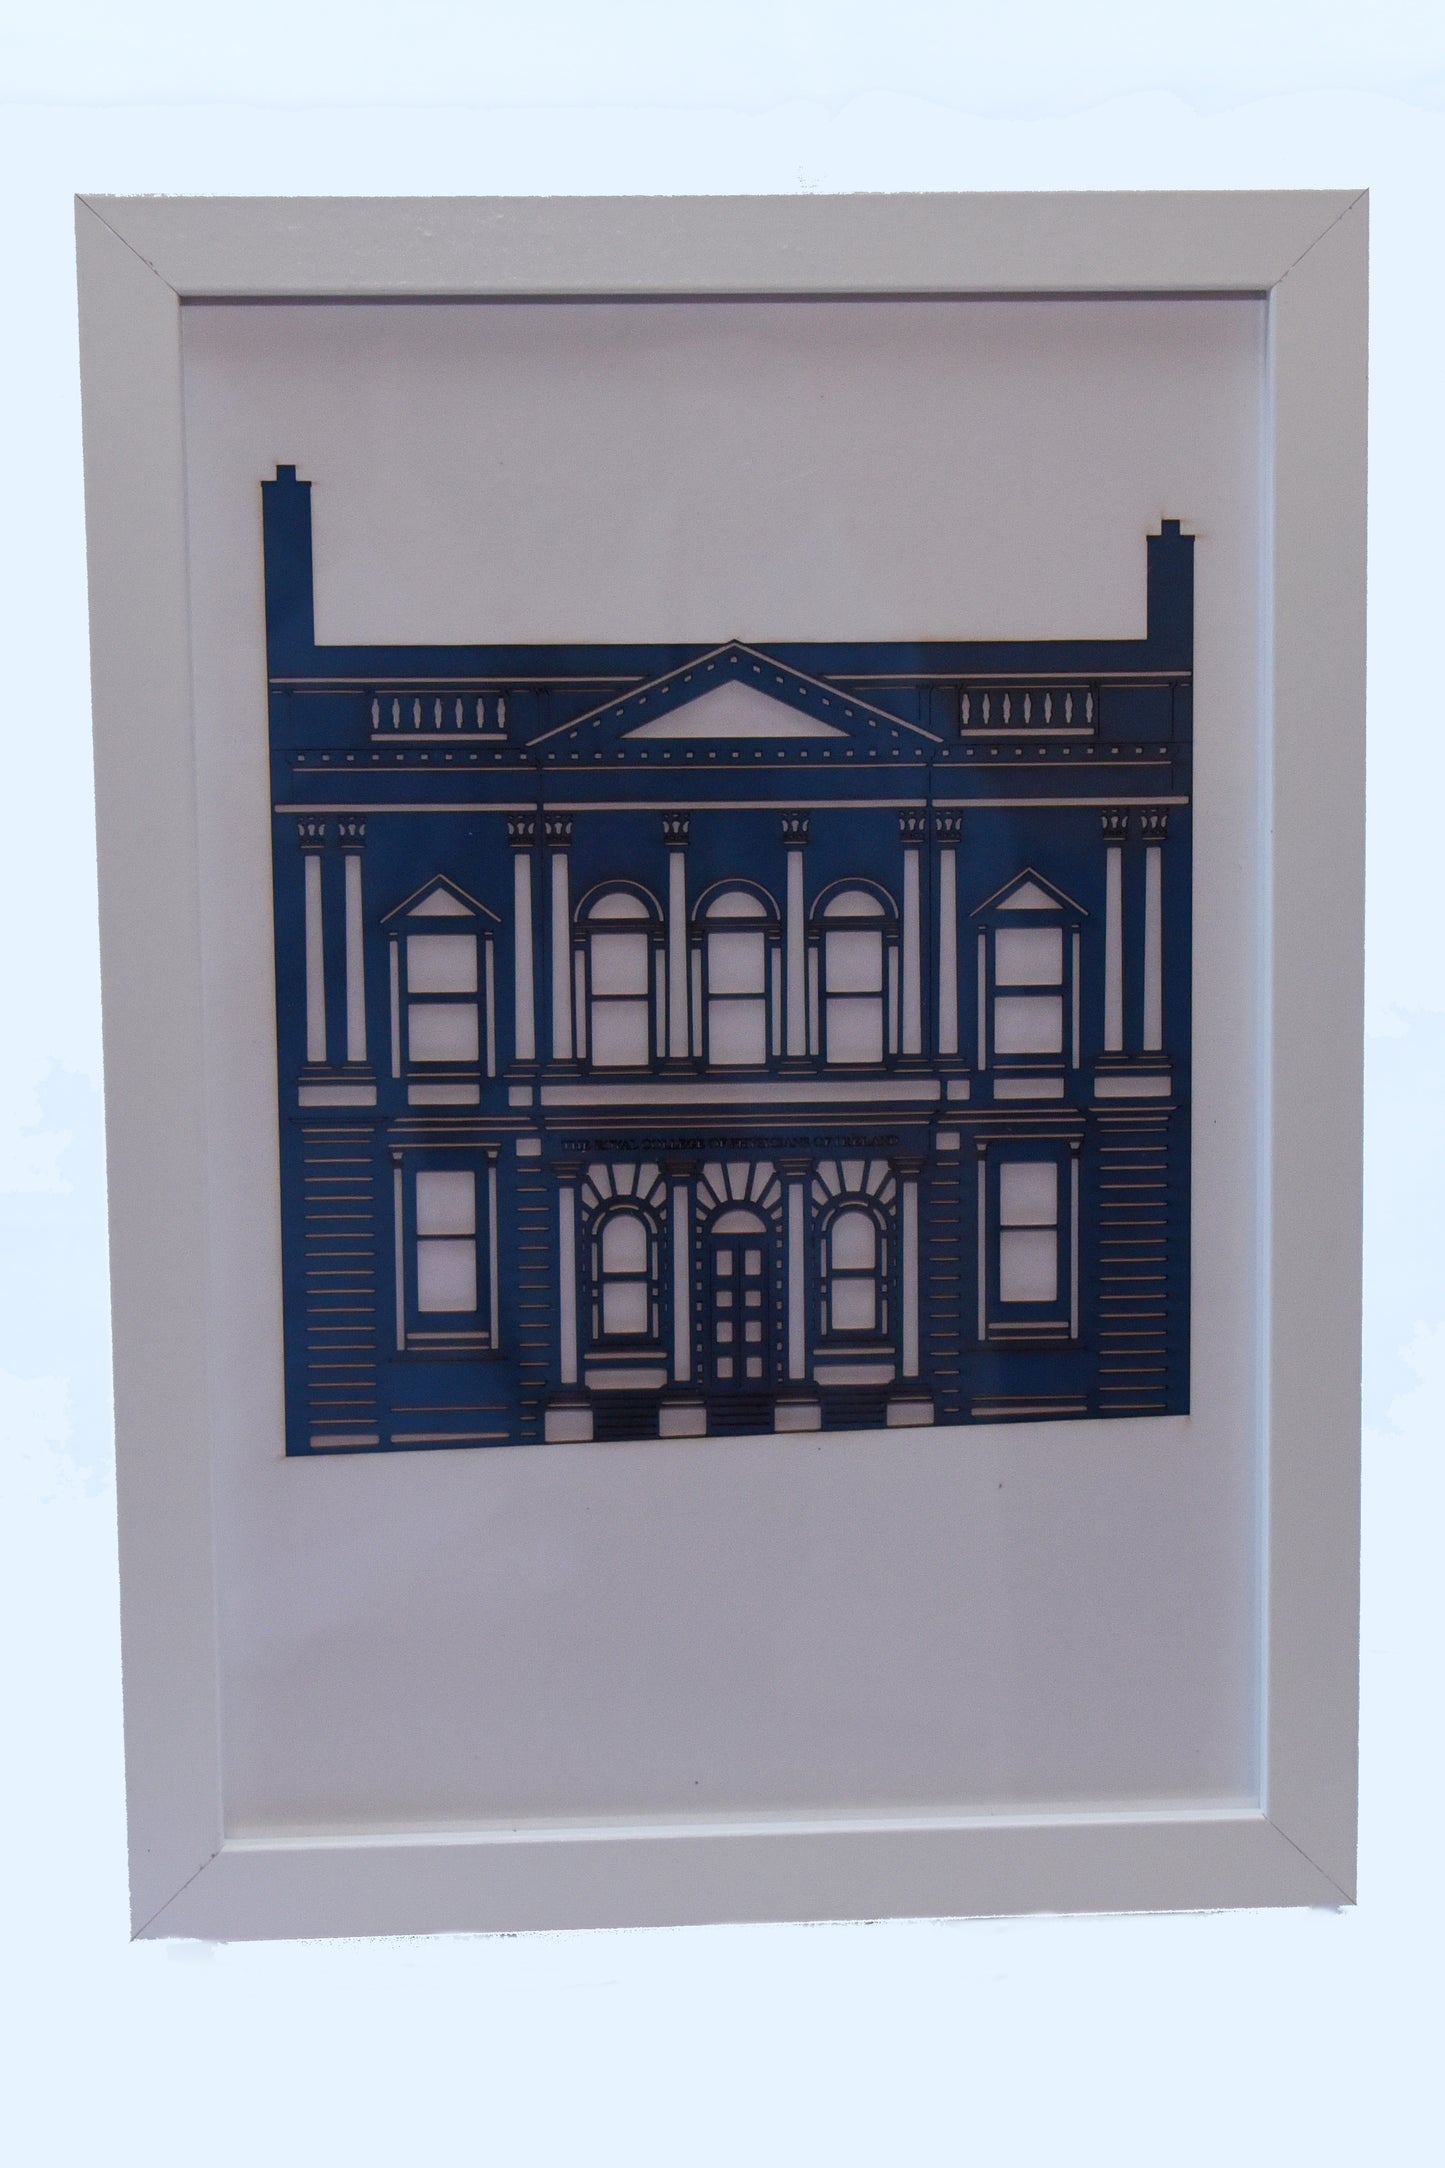 No. 6 Kildare Street Laser Cut Print